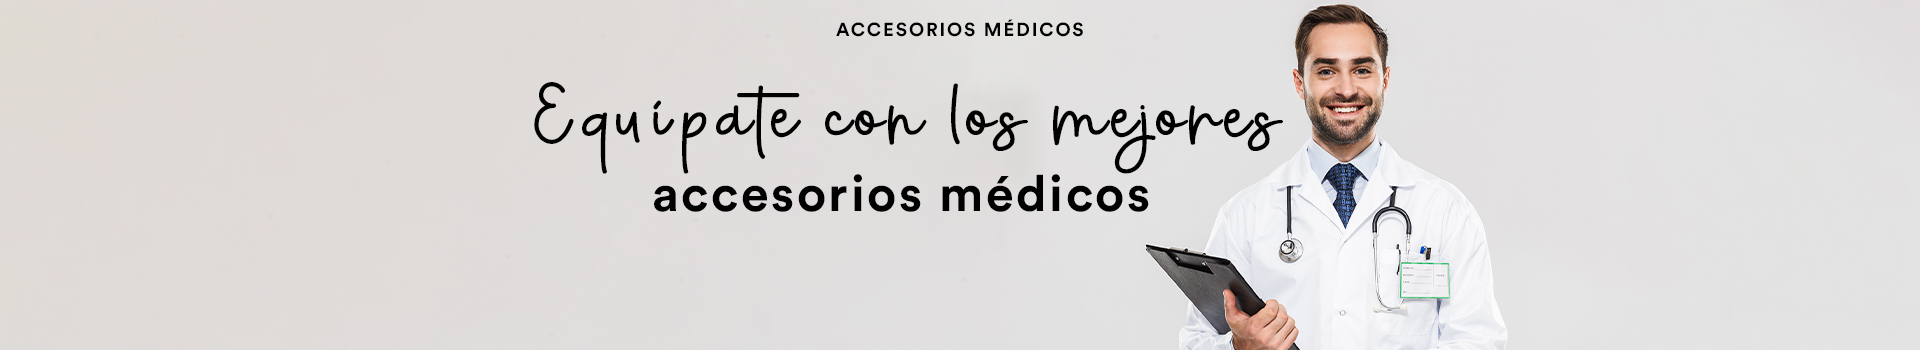 Accesorios Médicos_SeccionBusquedaProductos